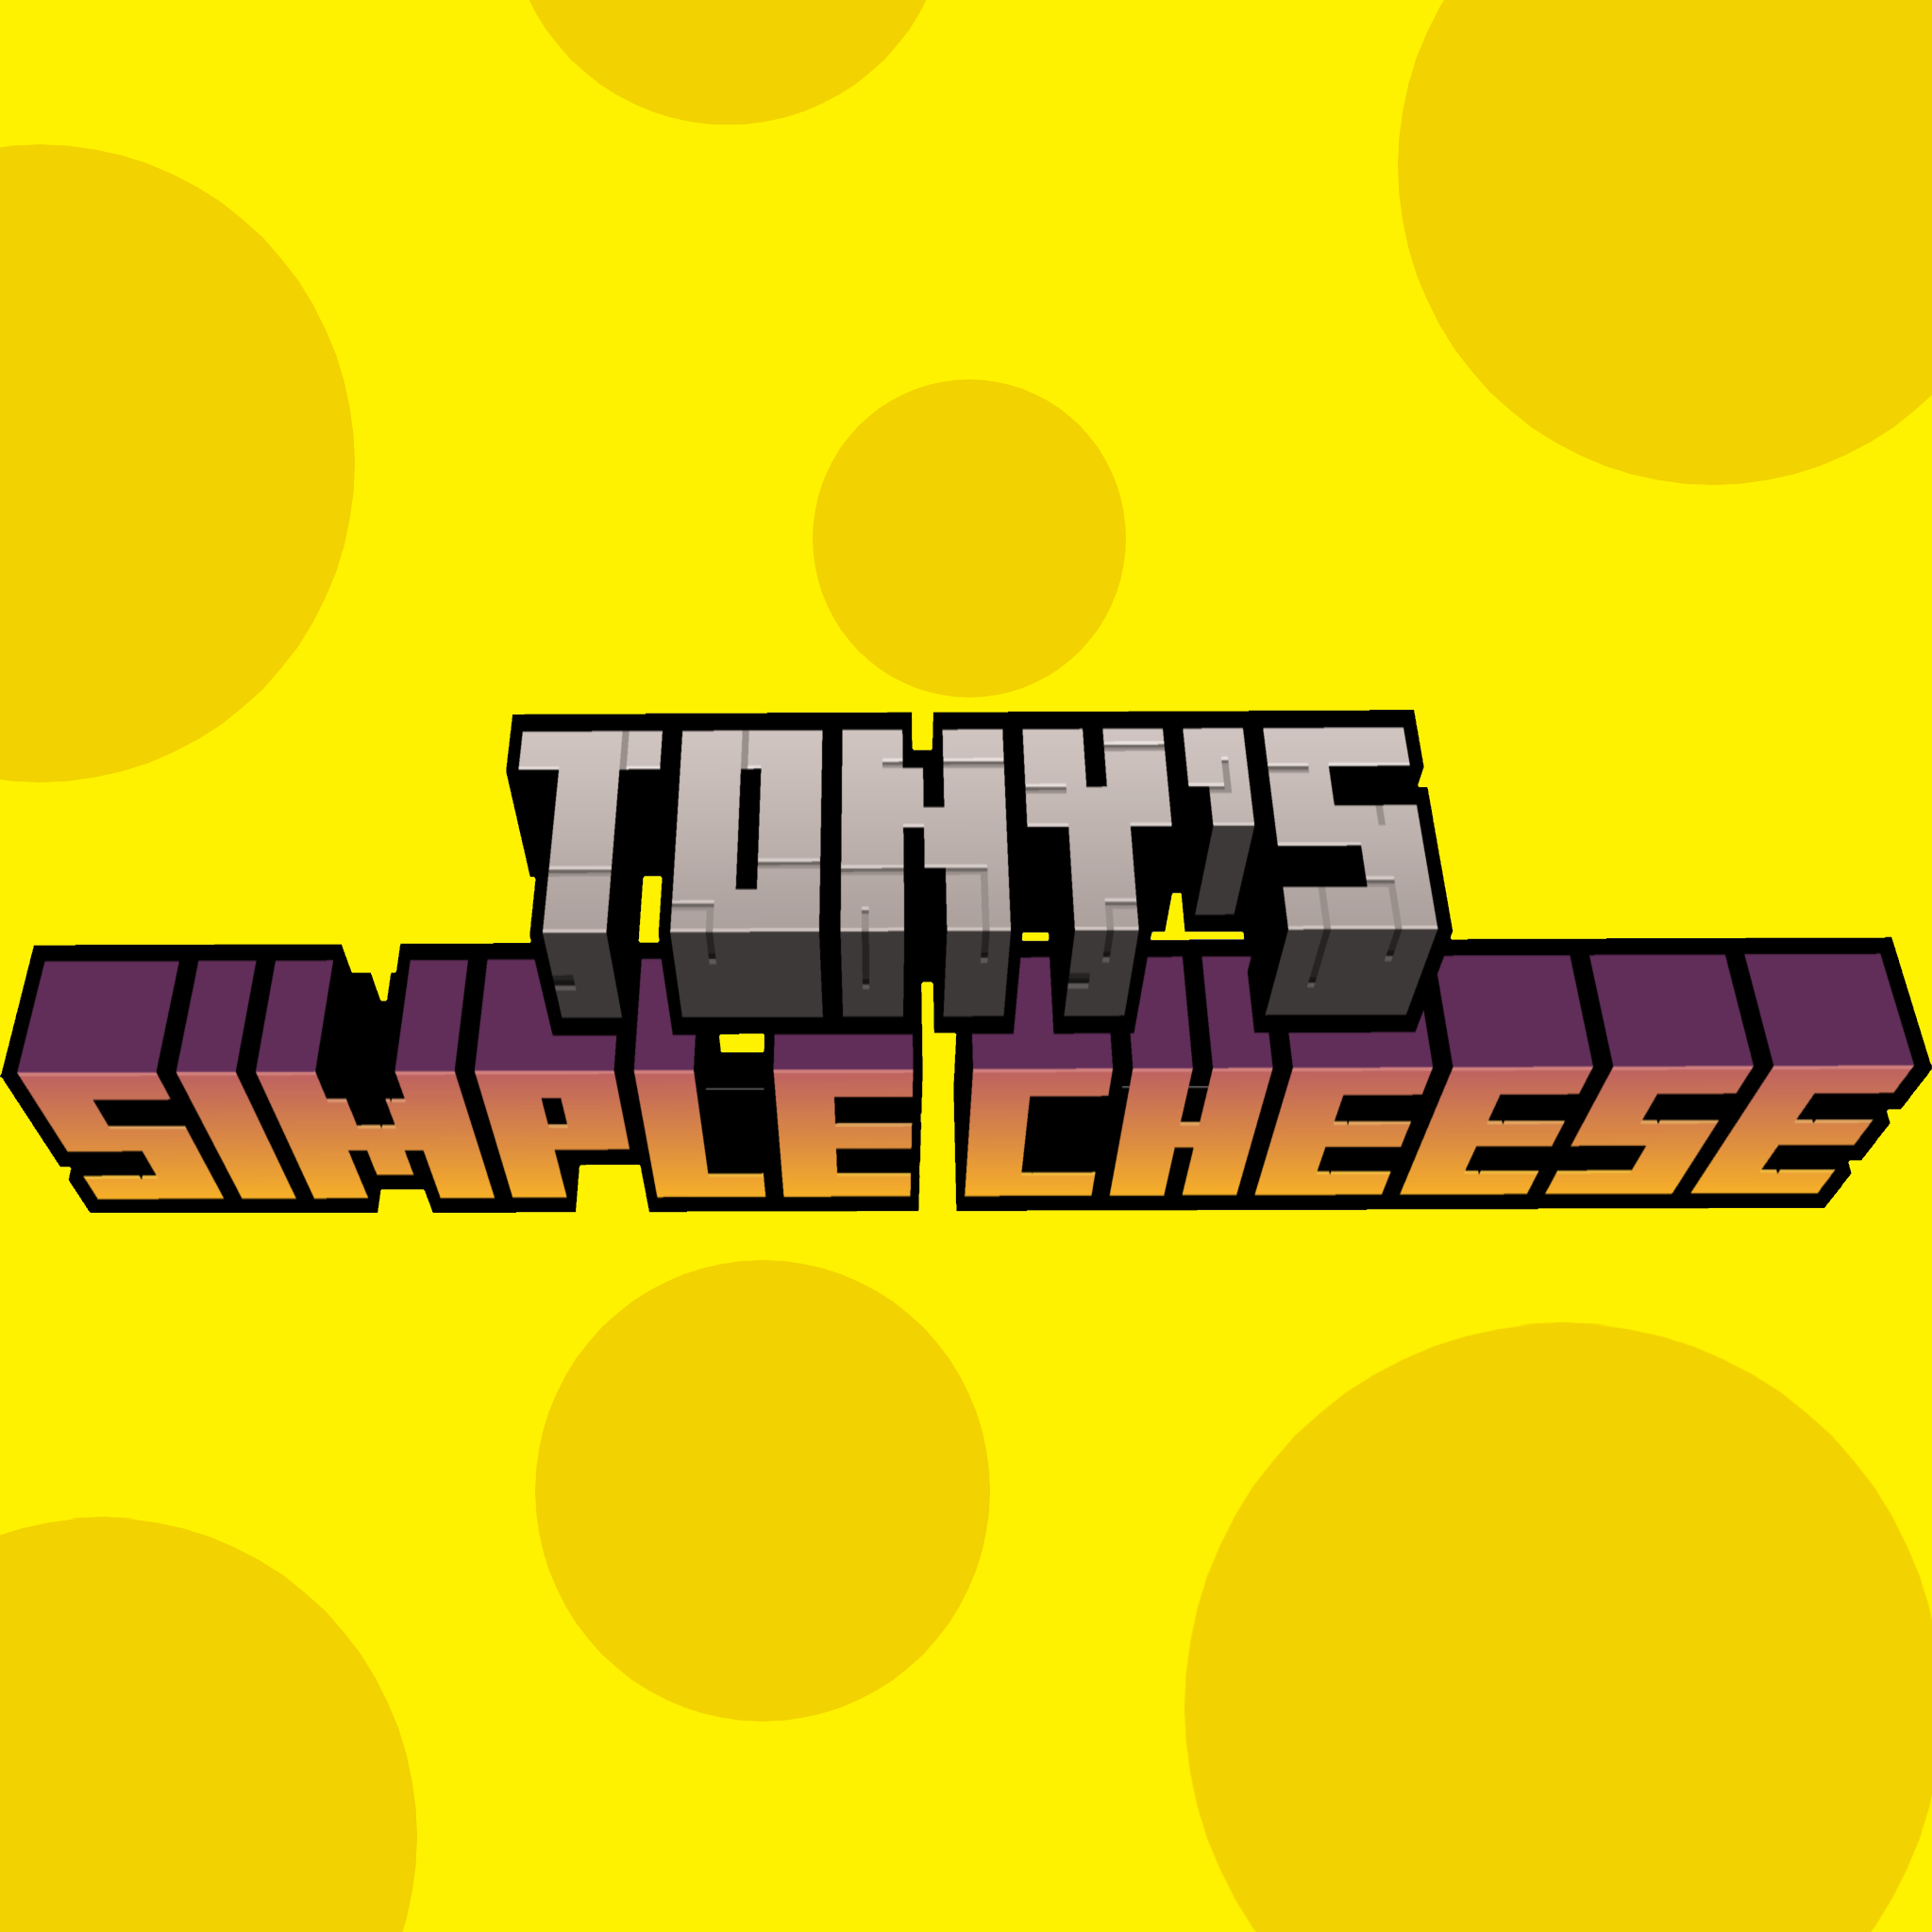 Tony's Simple Cheese